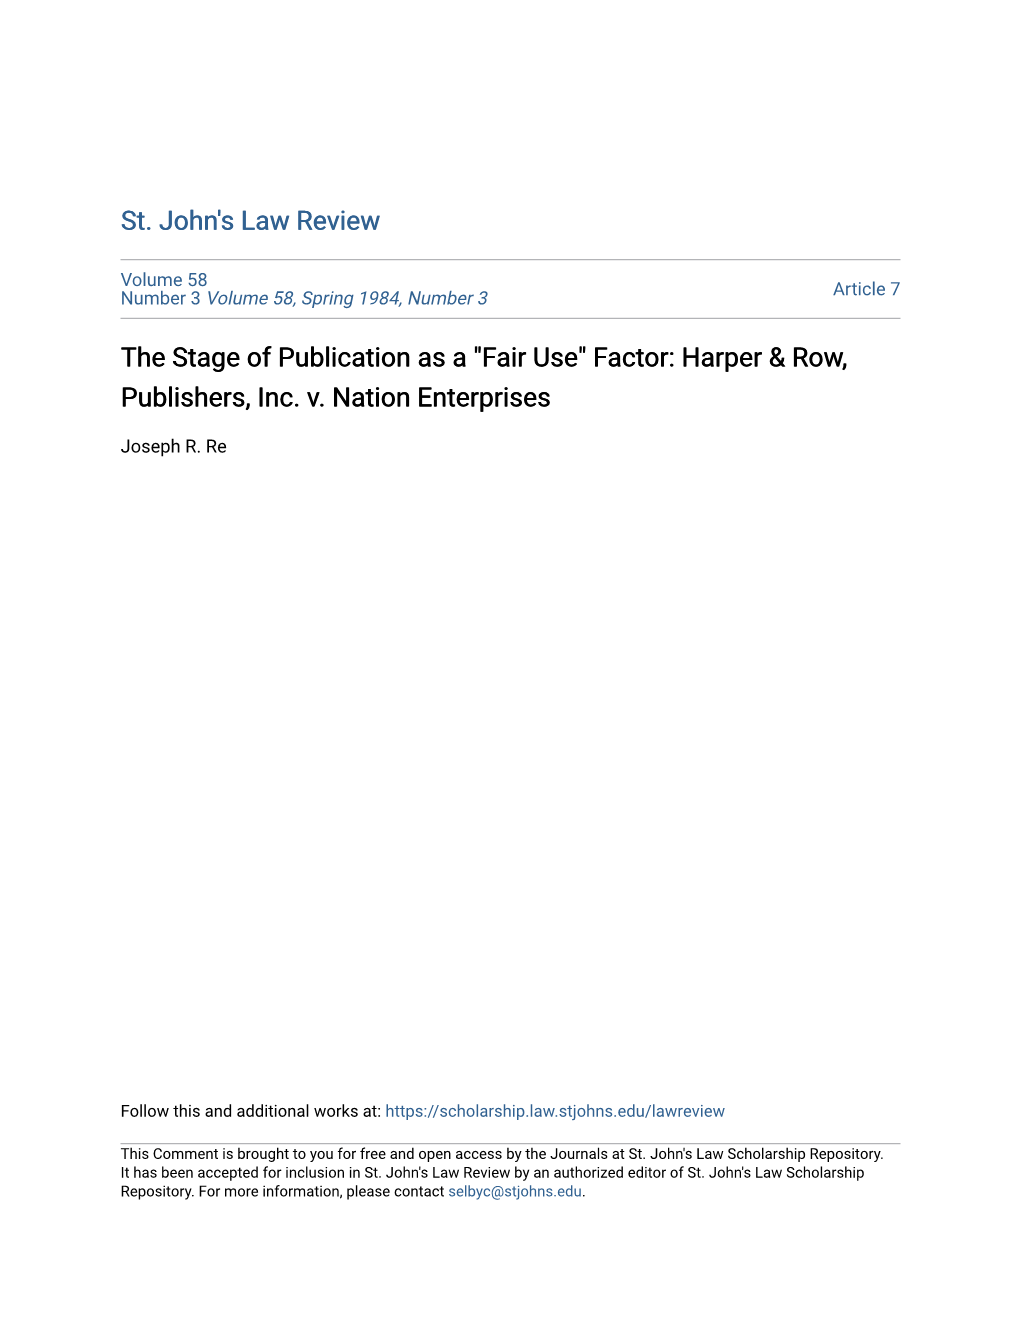 Fair Use" Factor: Harper & Row, Publishers, Inc